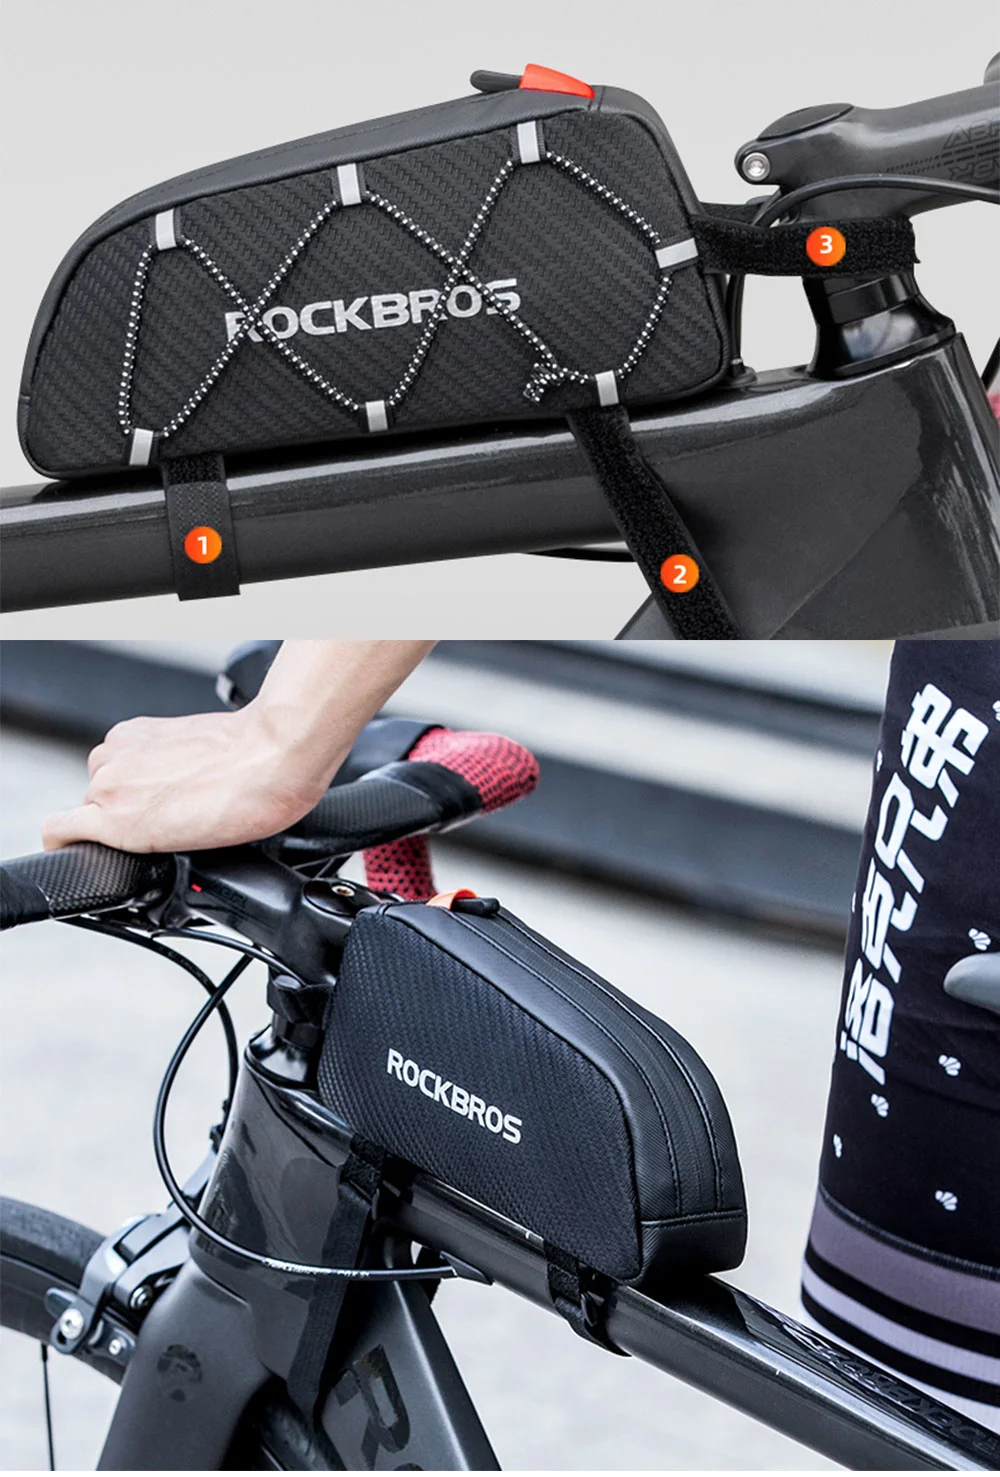 Rockbros Mountain Bike Bag Front Beam Bag Cycling Touch Screen Mobile Phone Bag